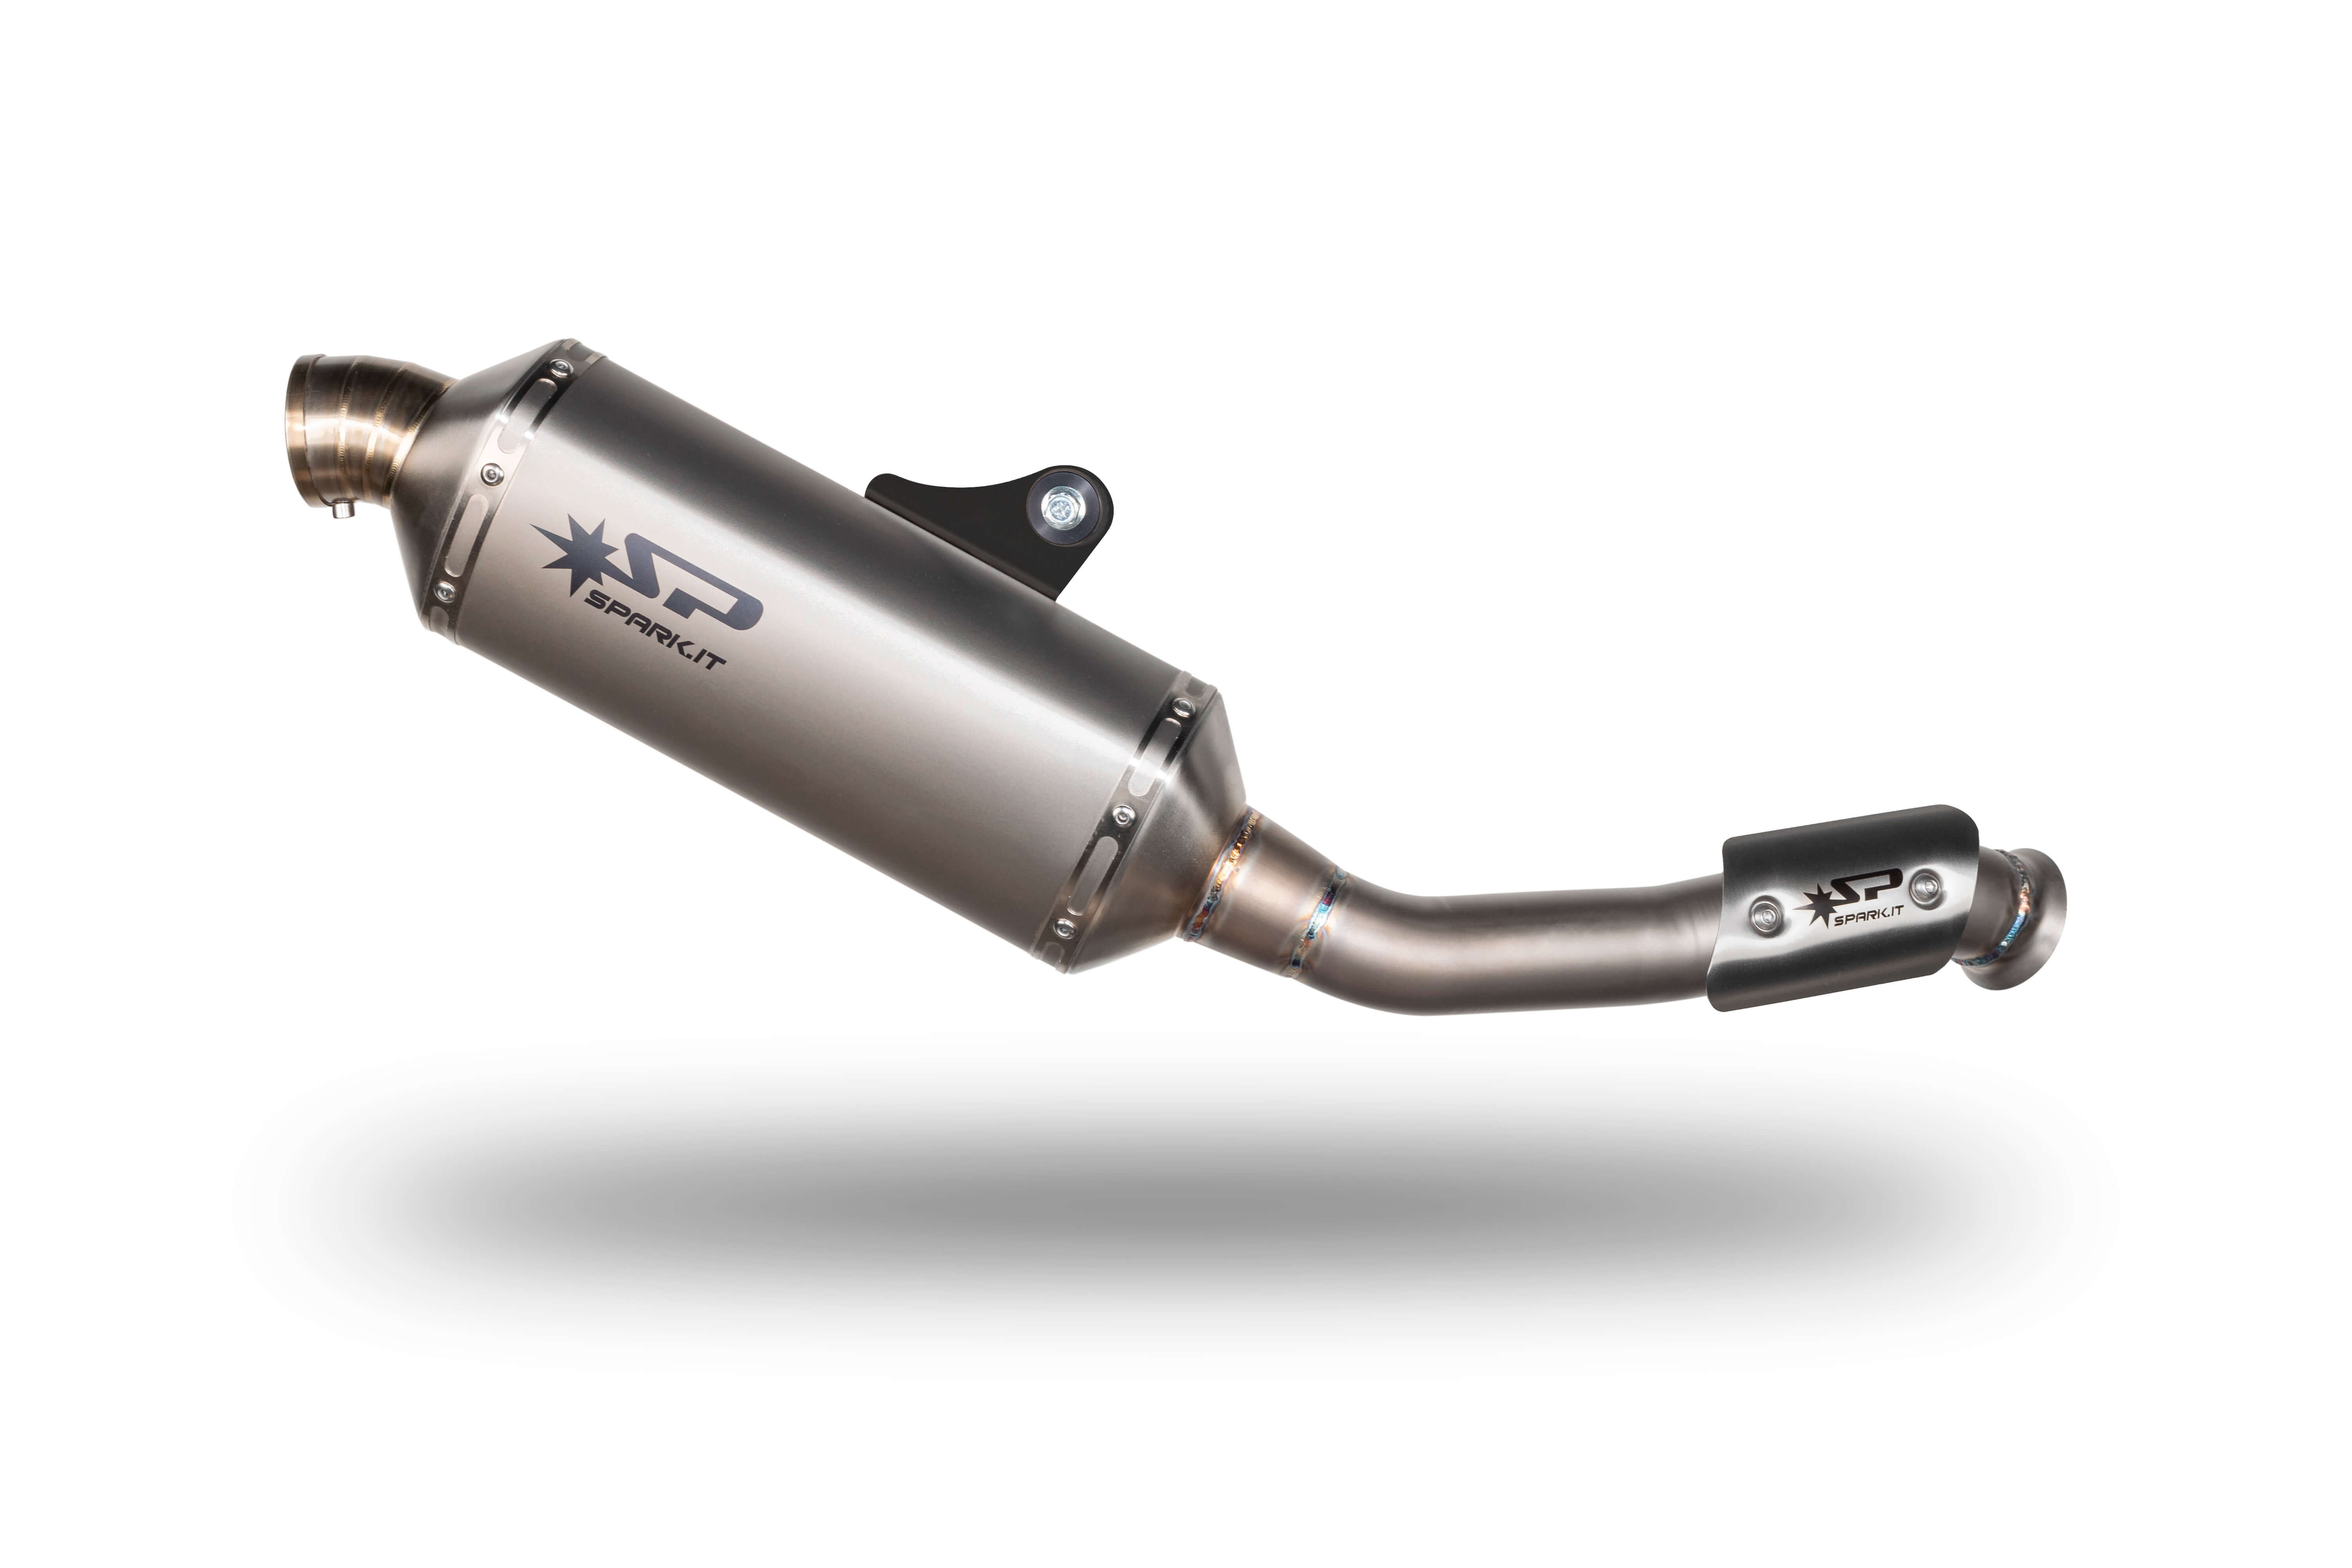 Homologated Moto GP double exhaust system for KTM Duke 790